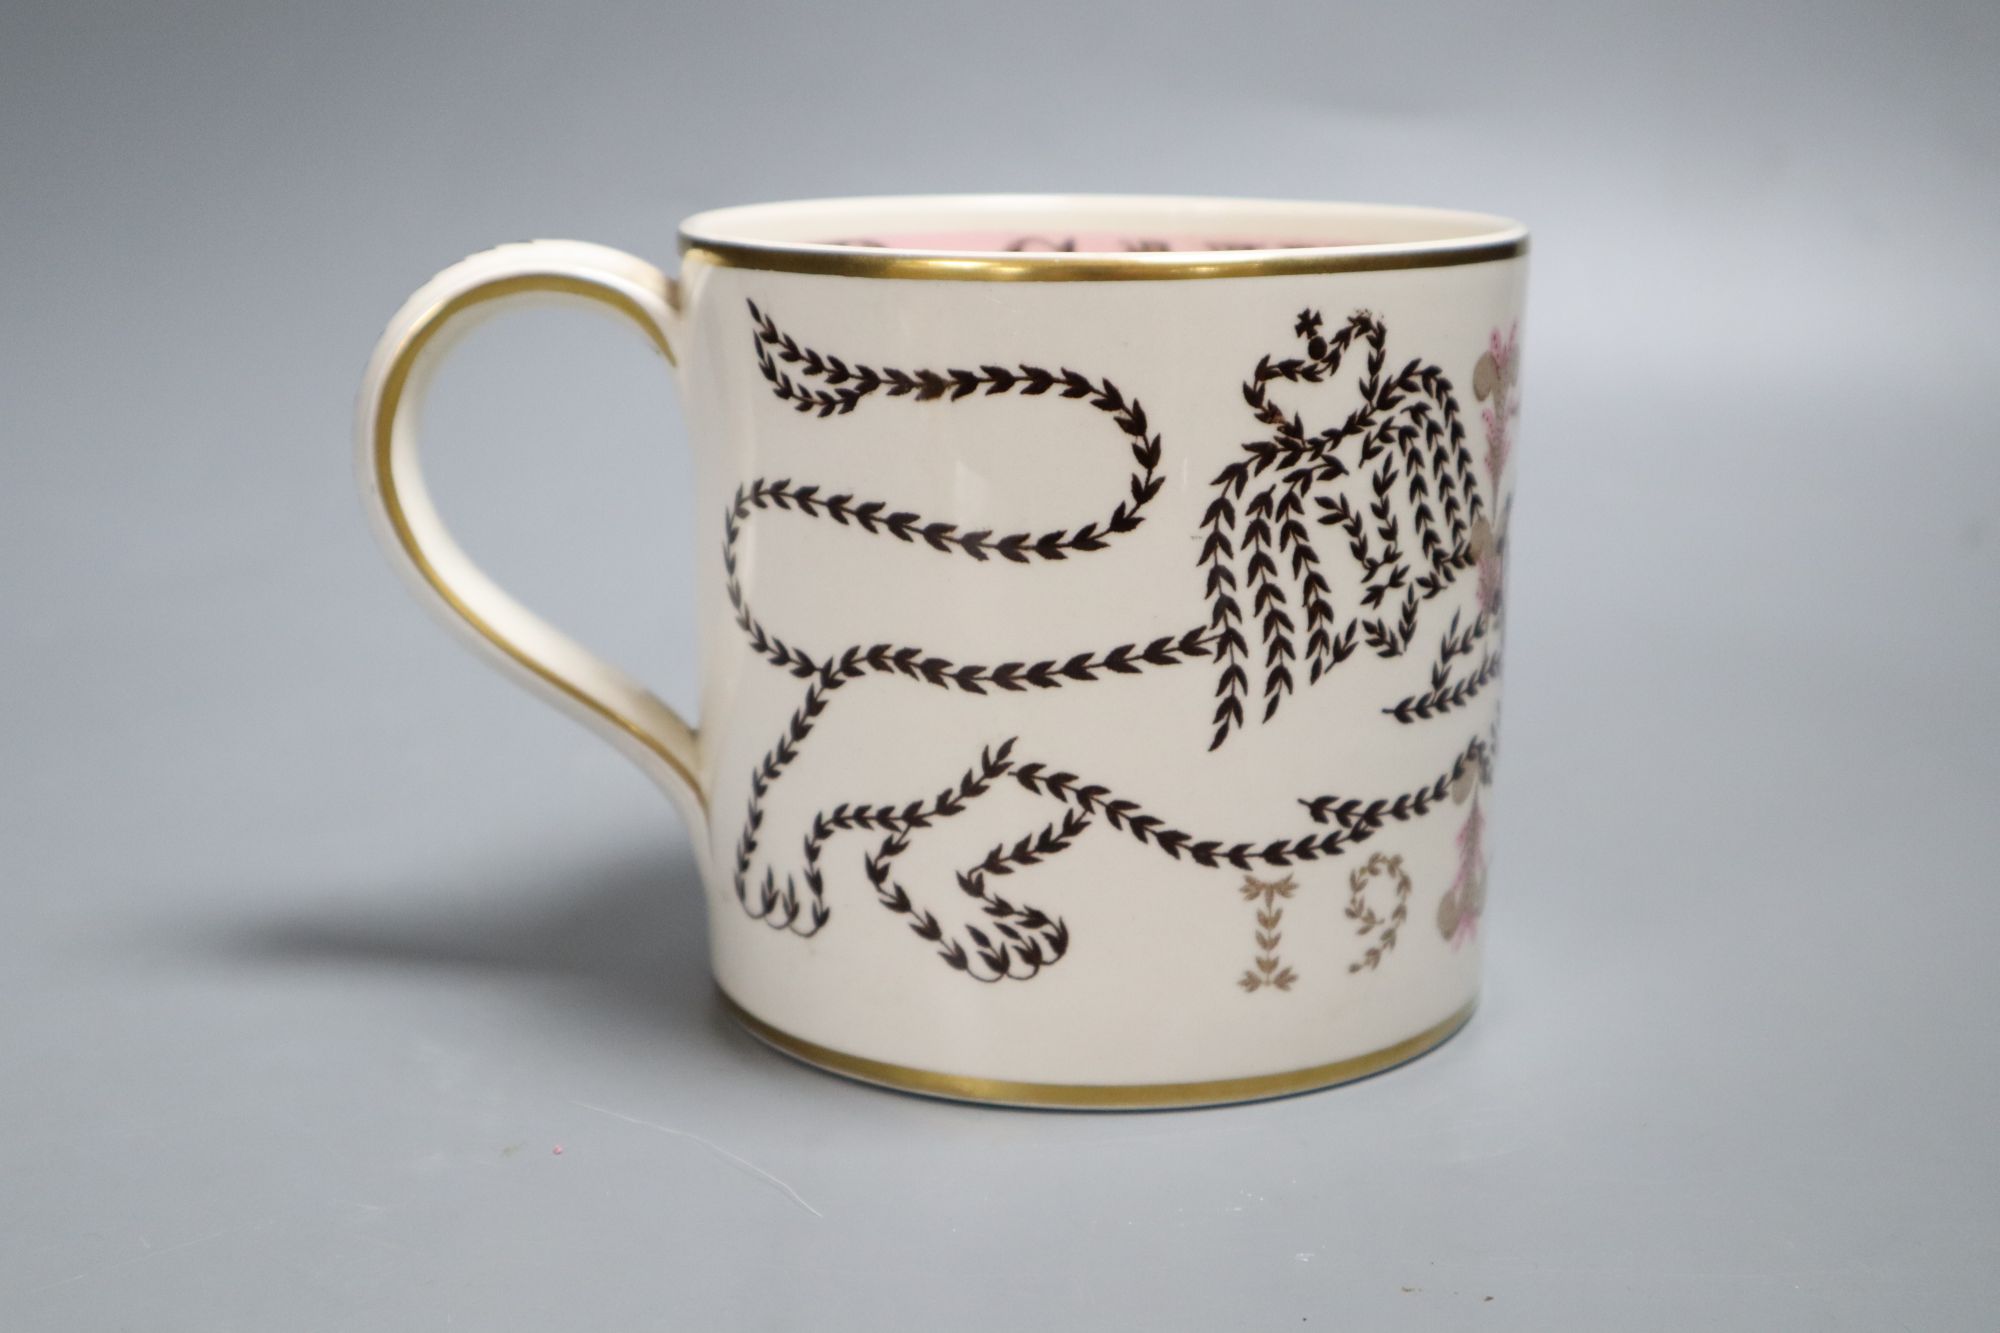 A Wedgwood Queen Elizabeth II Coronation mug, by Richard Guyatt - Image 2 of 4